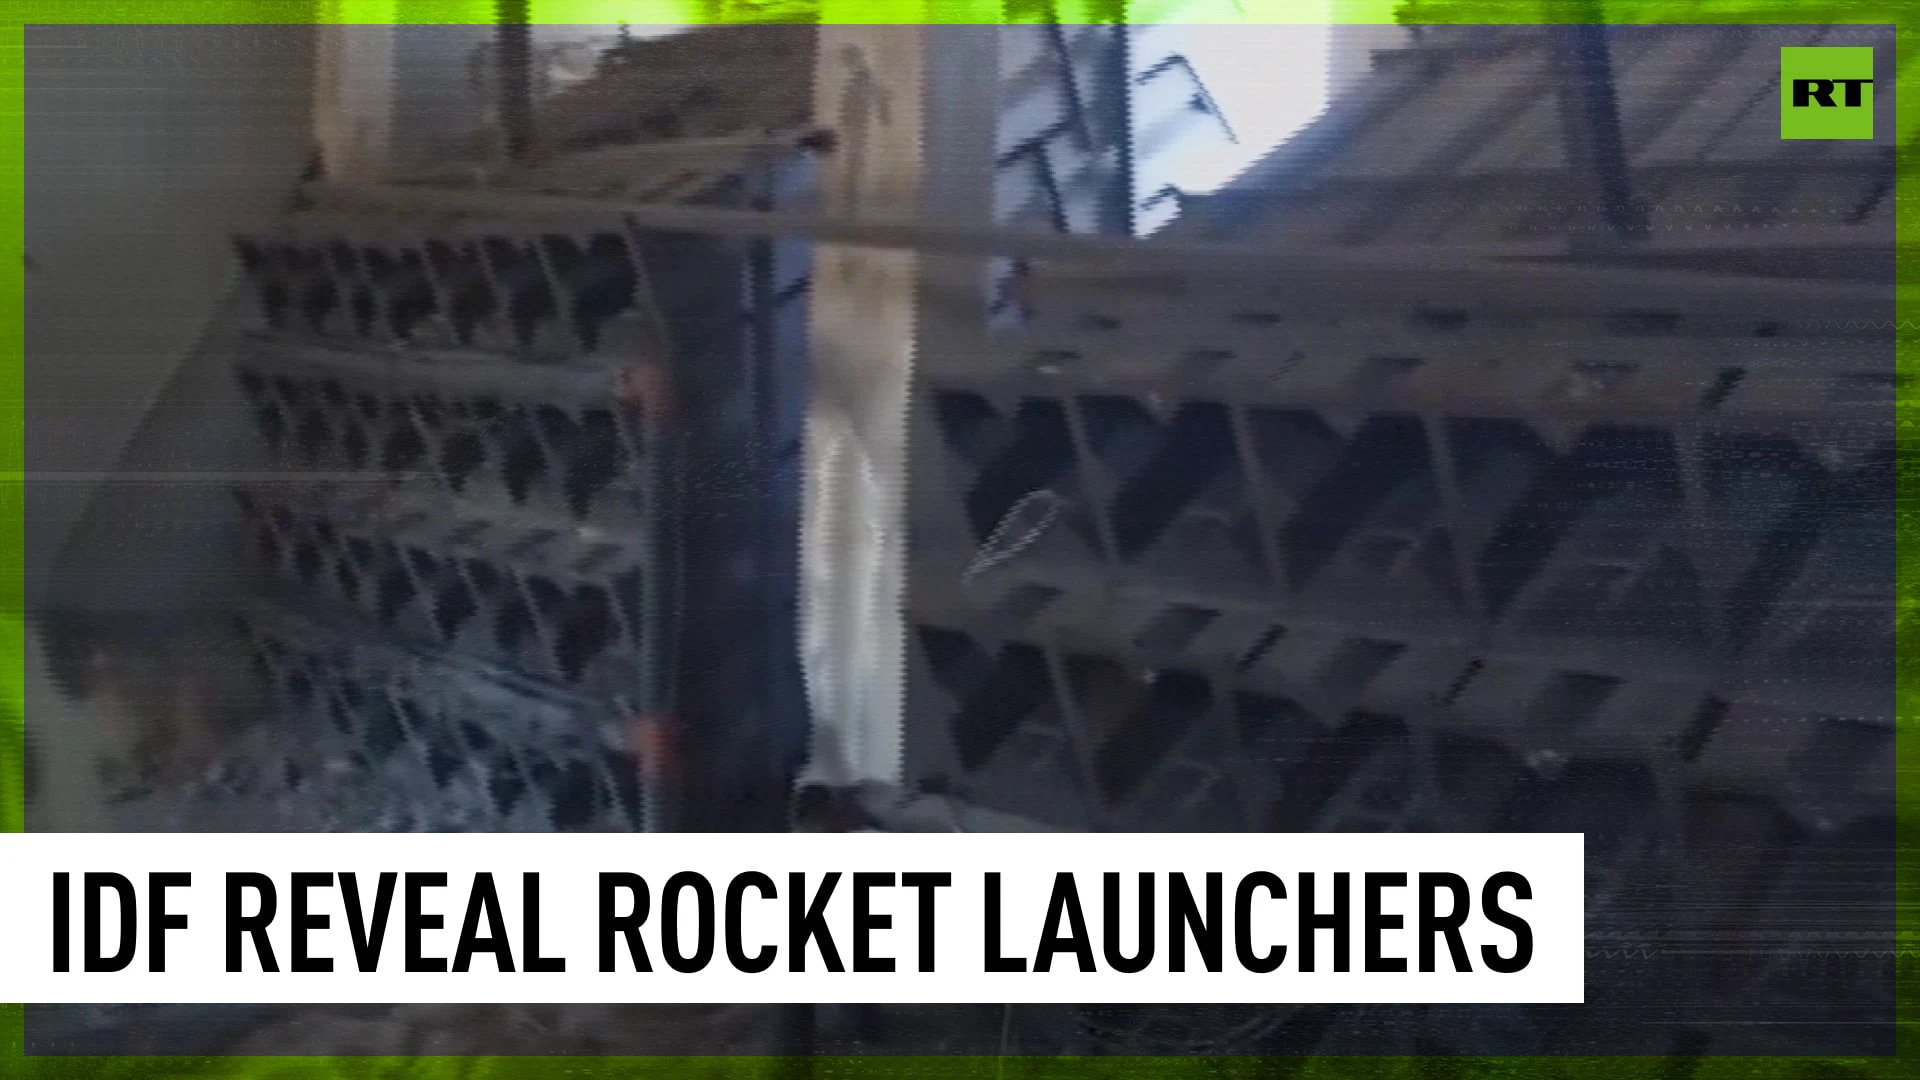 Rocket launchers found installed near mosque in Gaza | IDF video